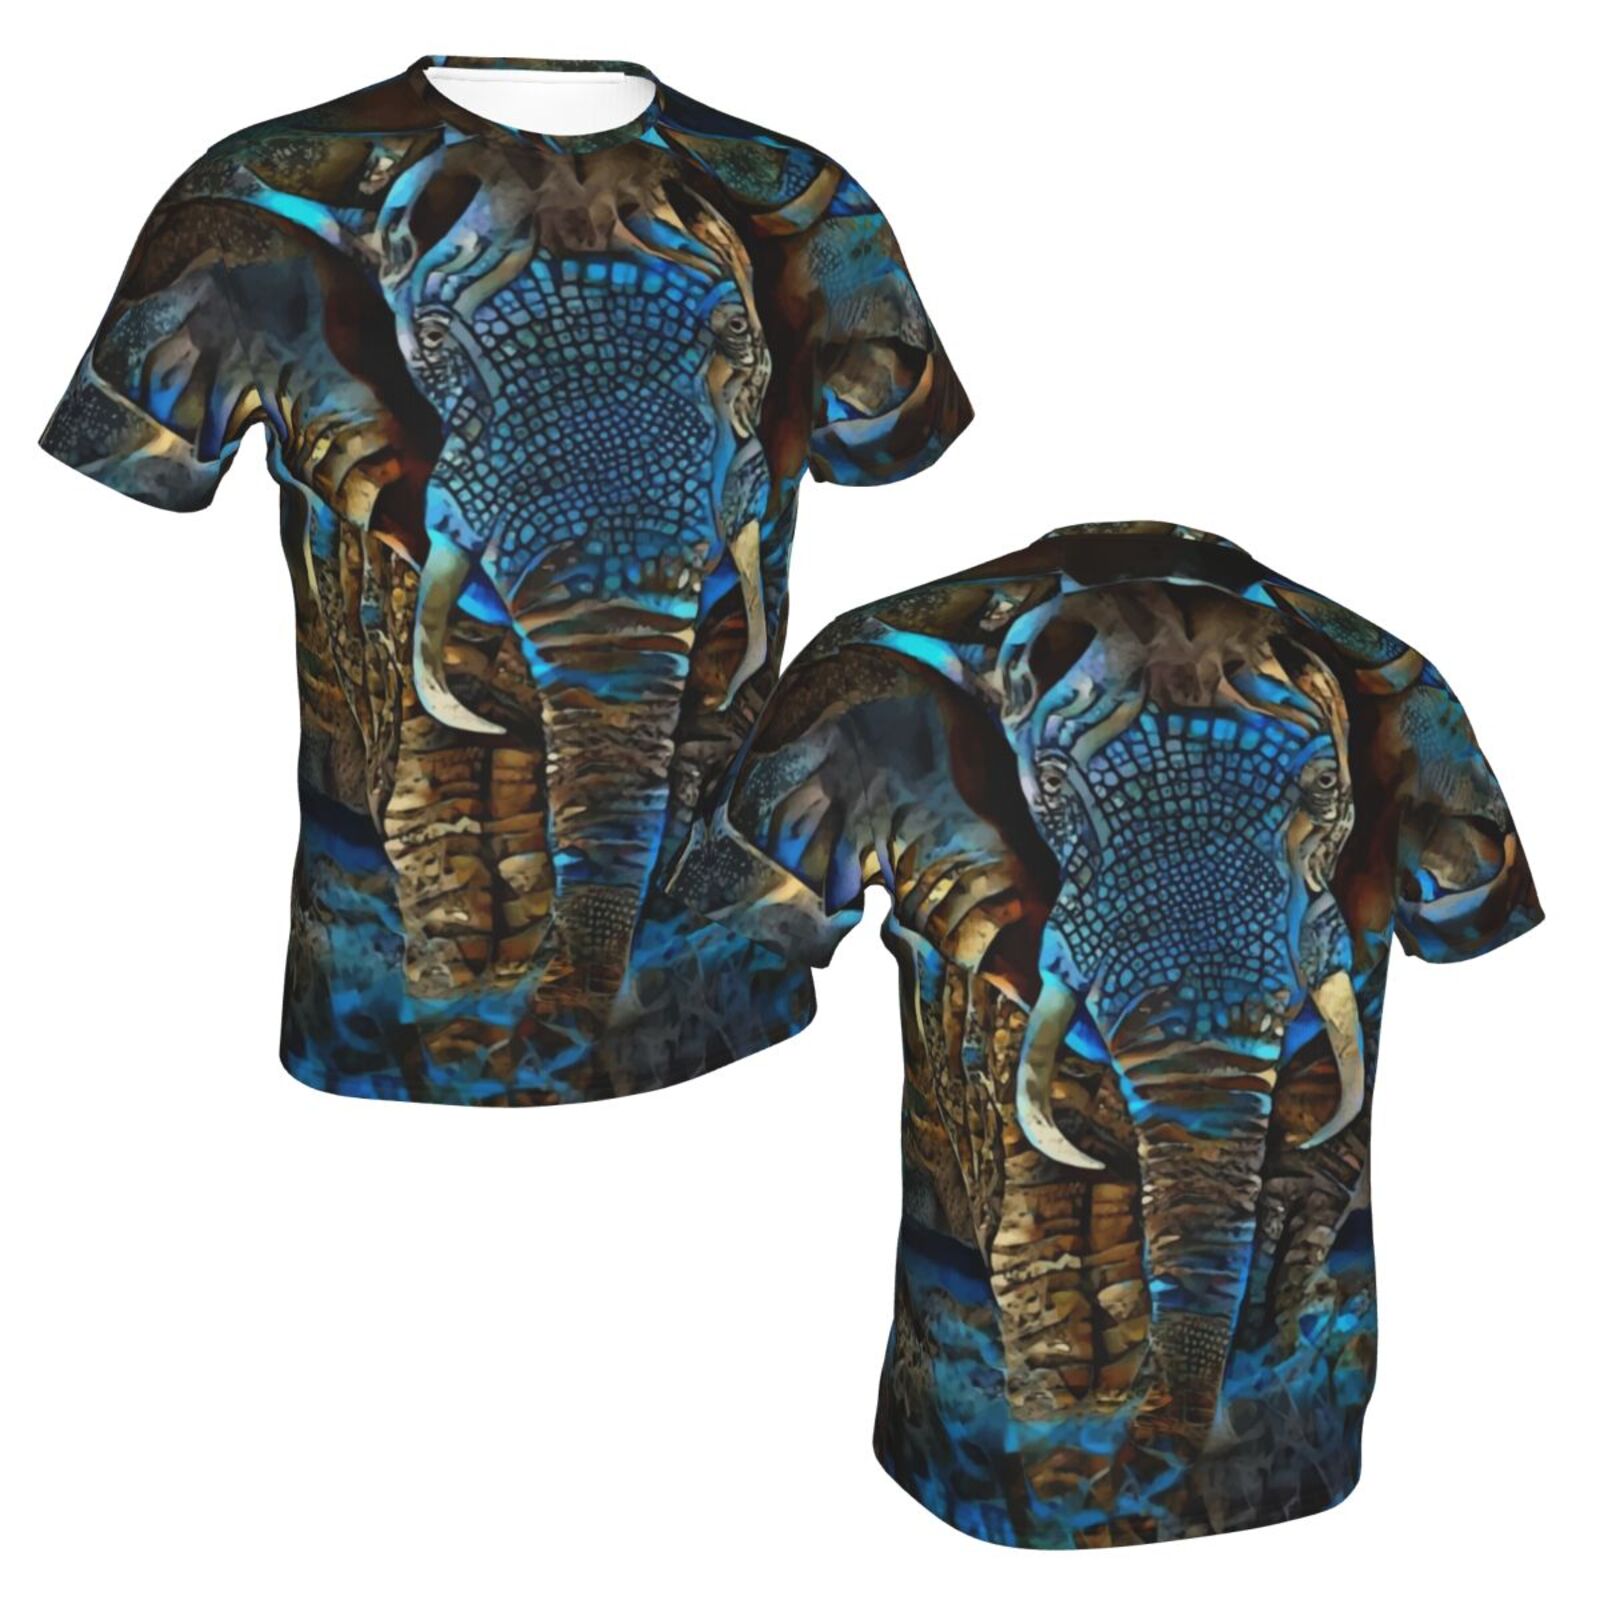 Camiseta Perú Clásica Elefante Marrón Azul Elementos De Técnica Mixta